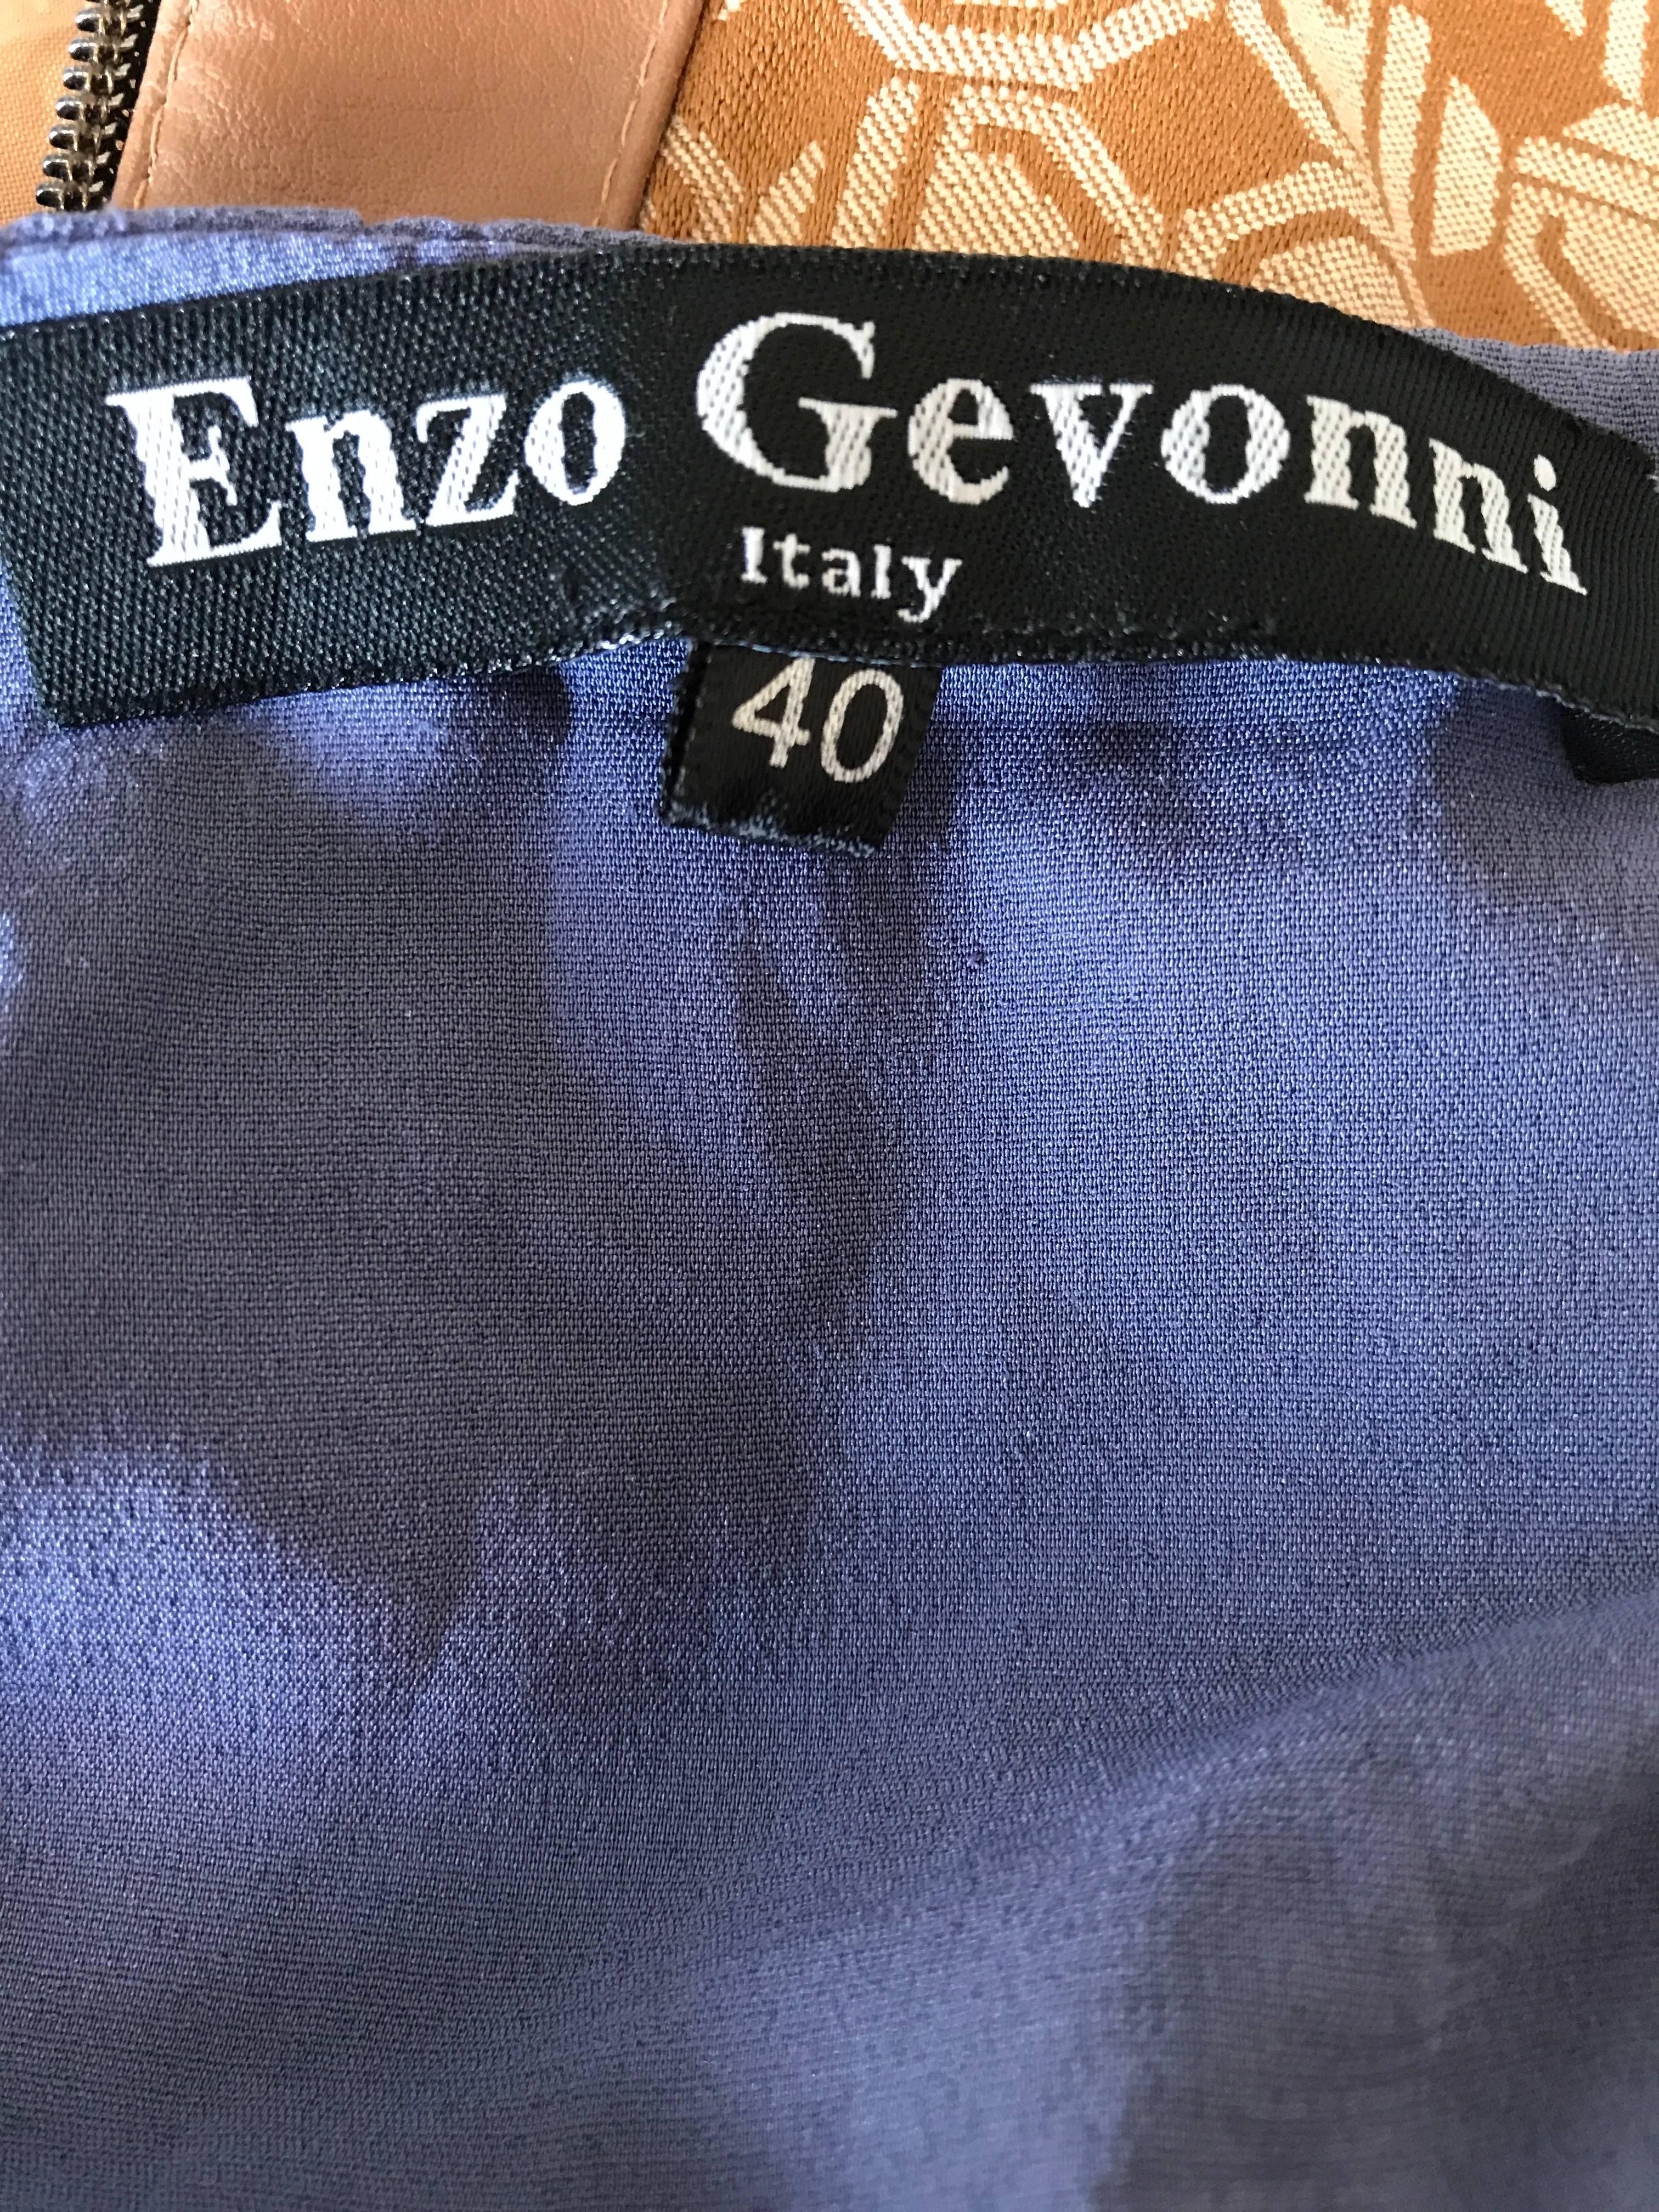 Enzo Gevonni - Mini robe tunique babydoll vintage violette pervenche en crochet en vente 5